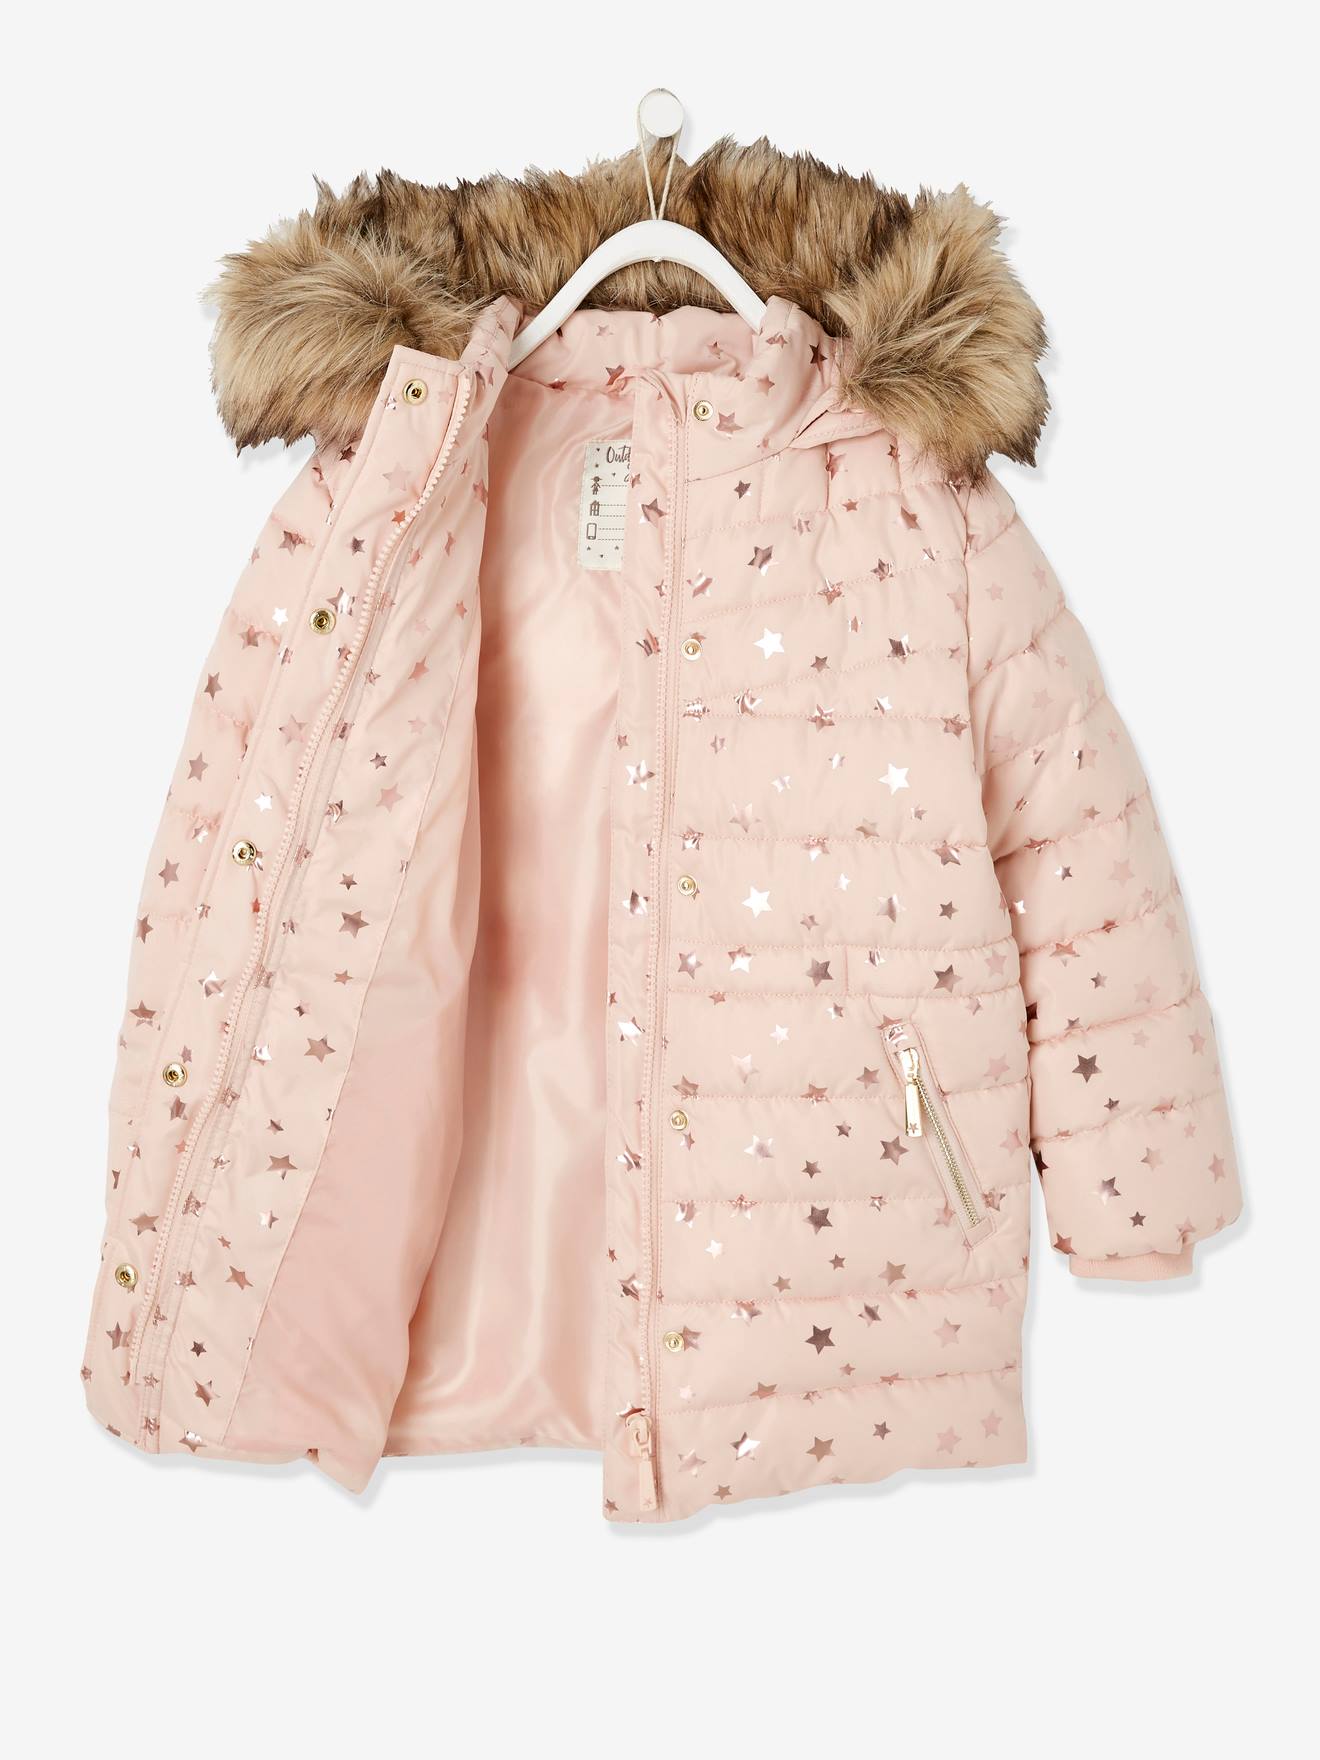 Just Love Polar Fleece Girls Jacket 